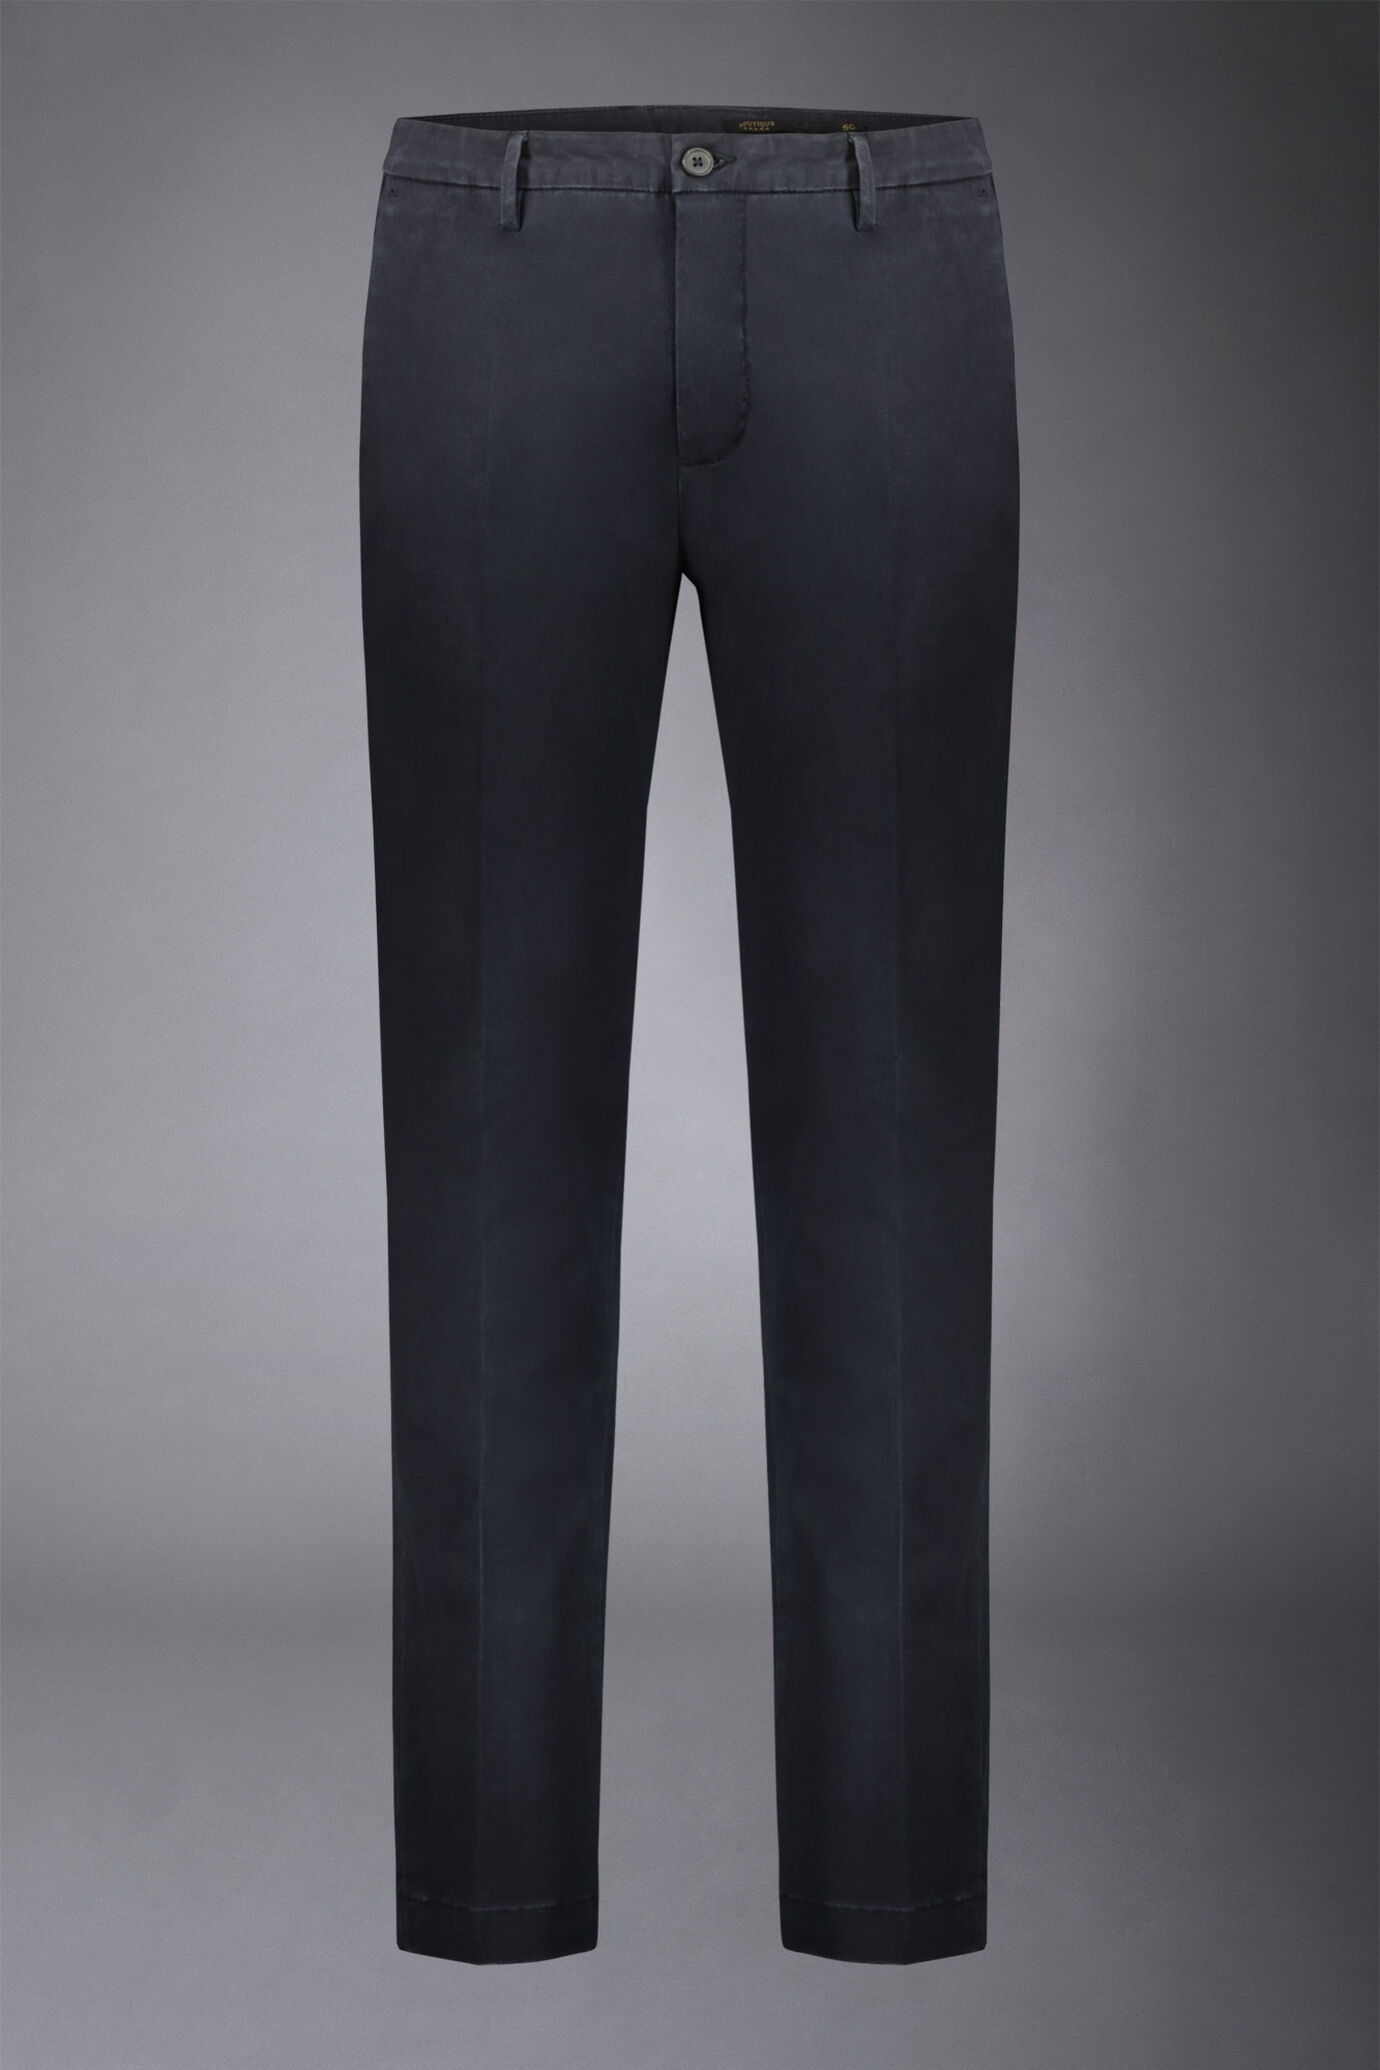 Men's classic regular fit chino pants stretch twill fabric